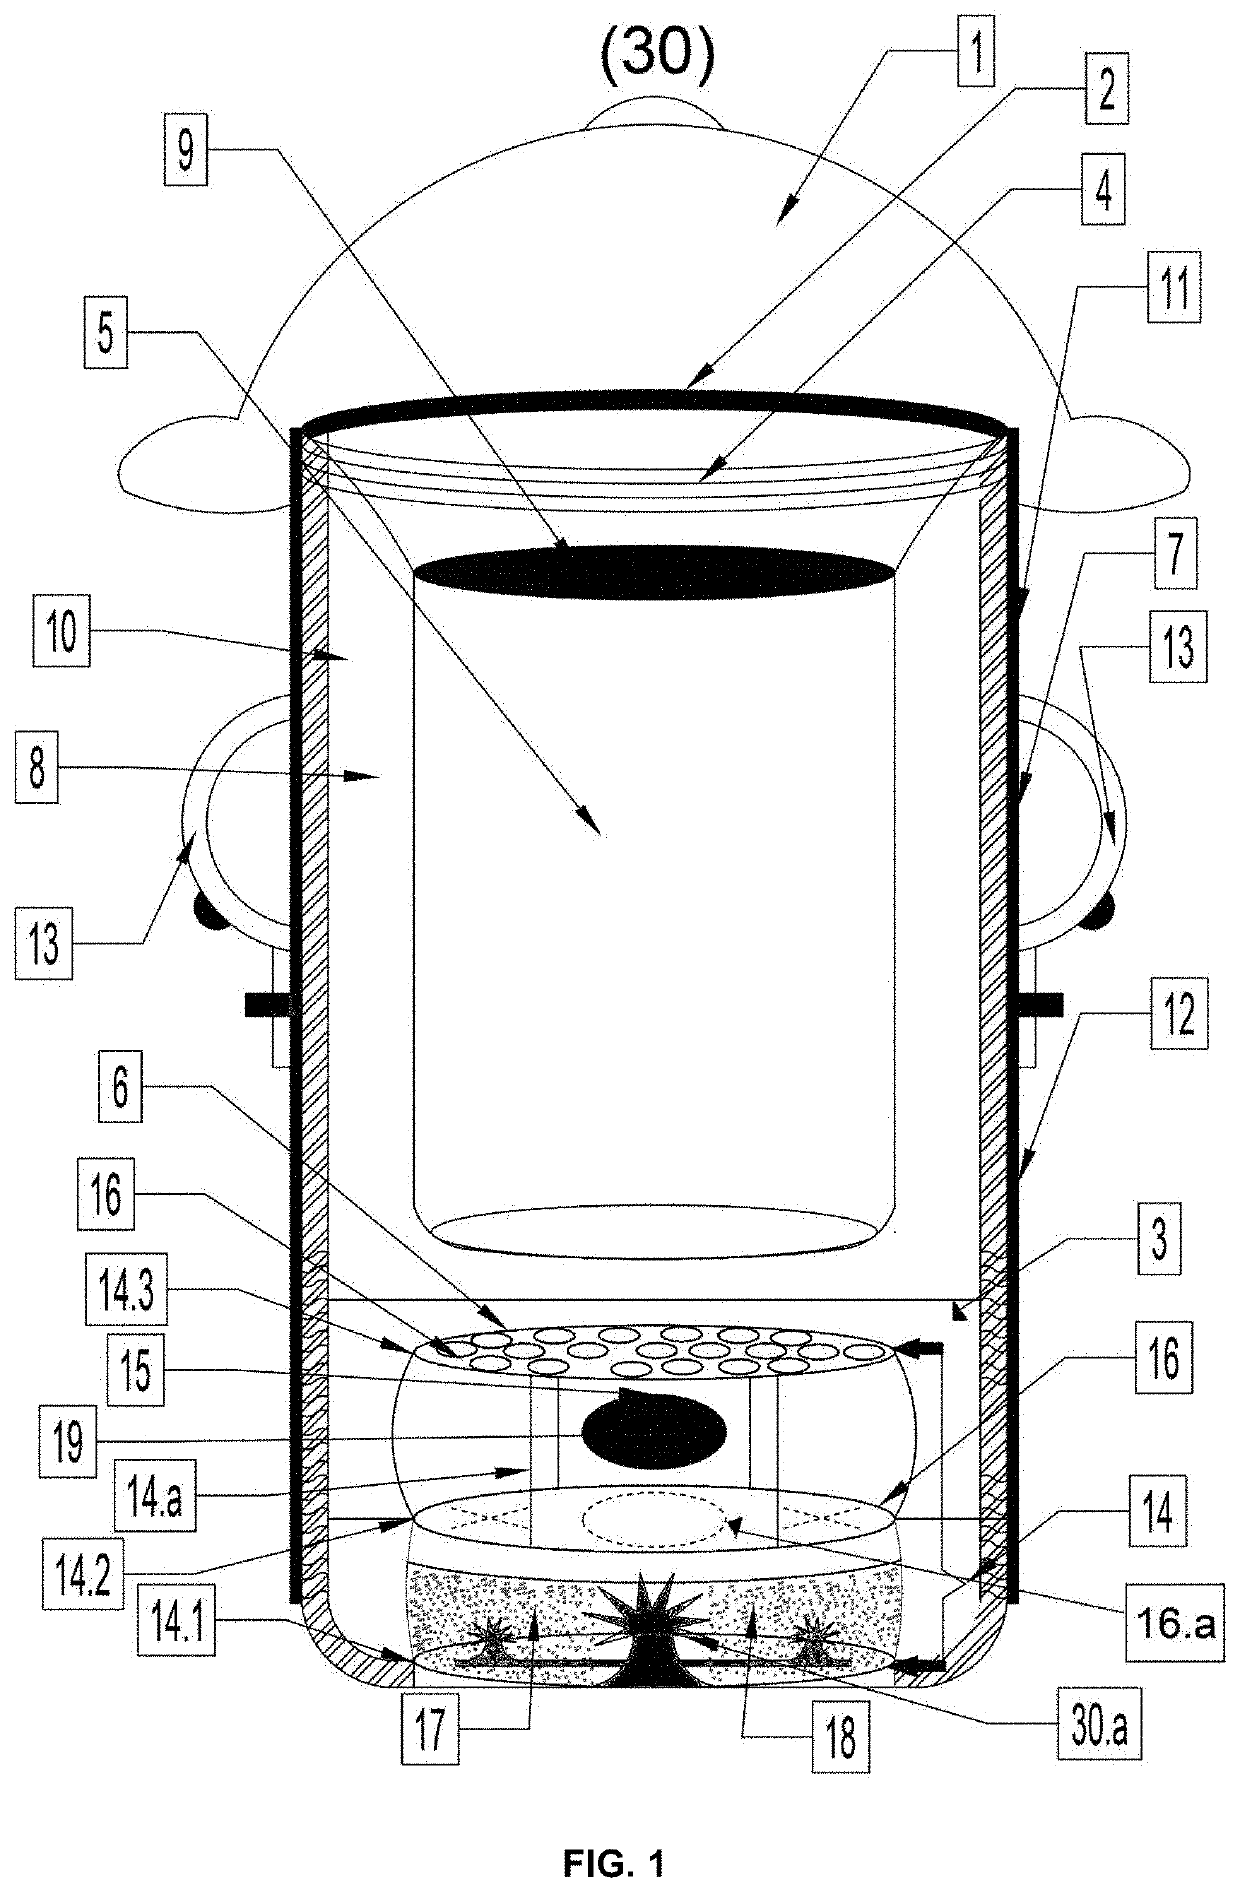 Self-heatable container